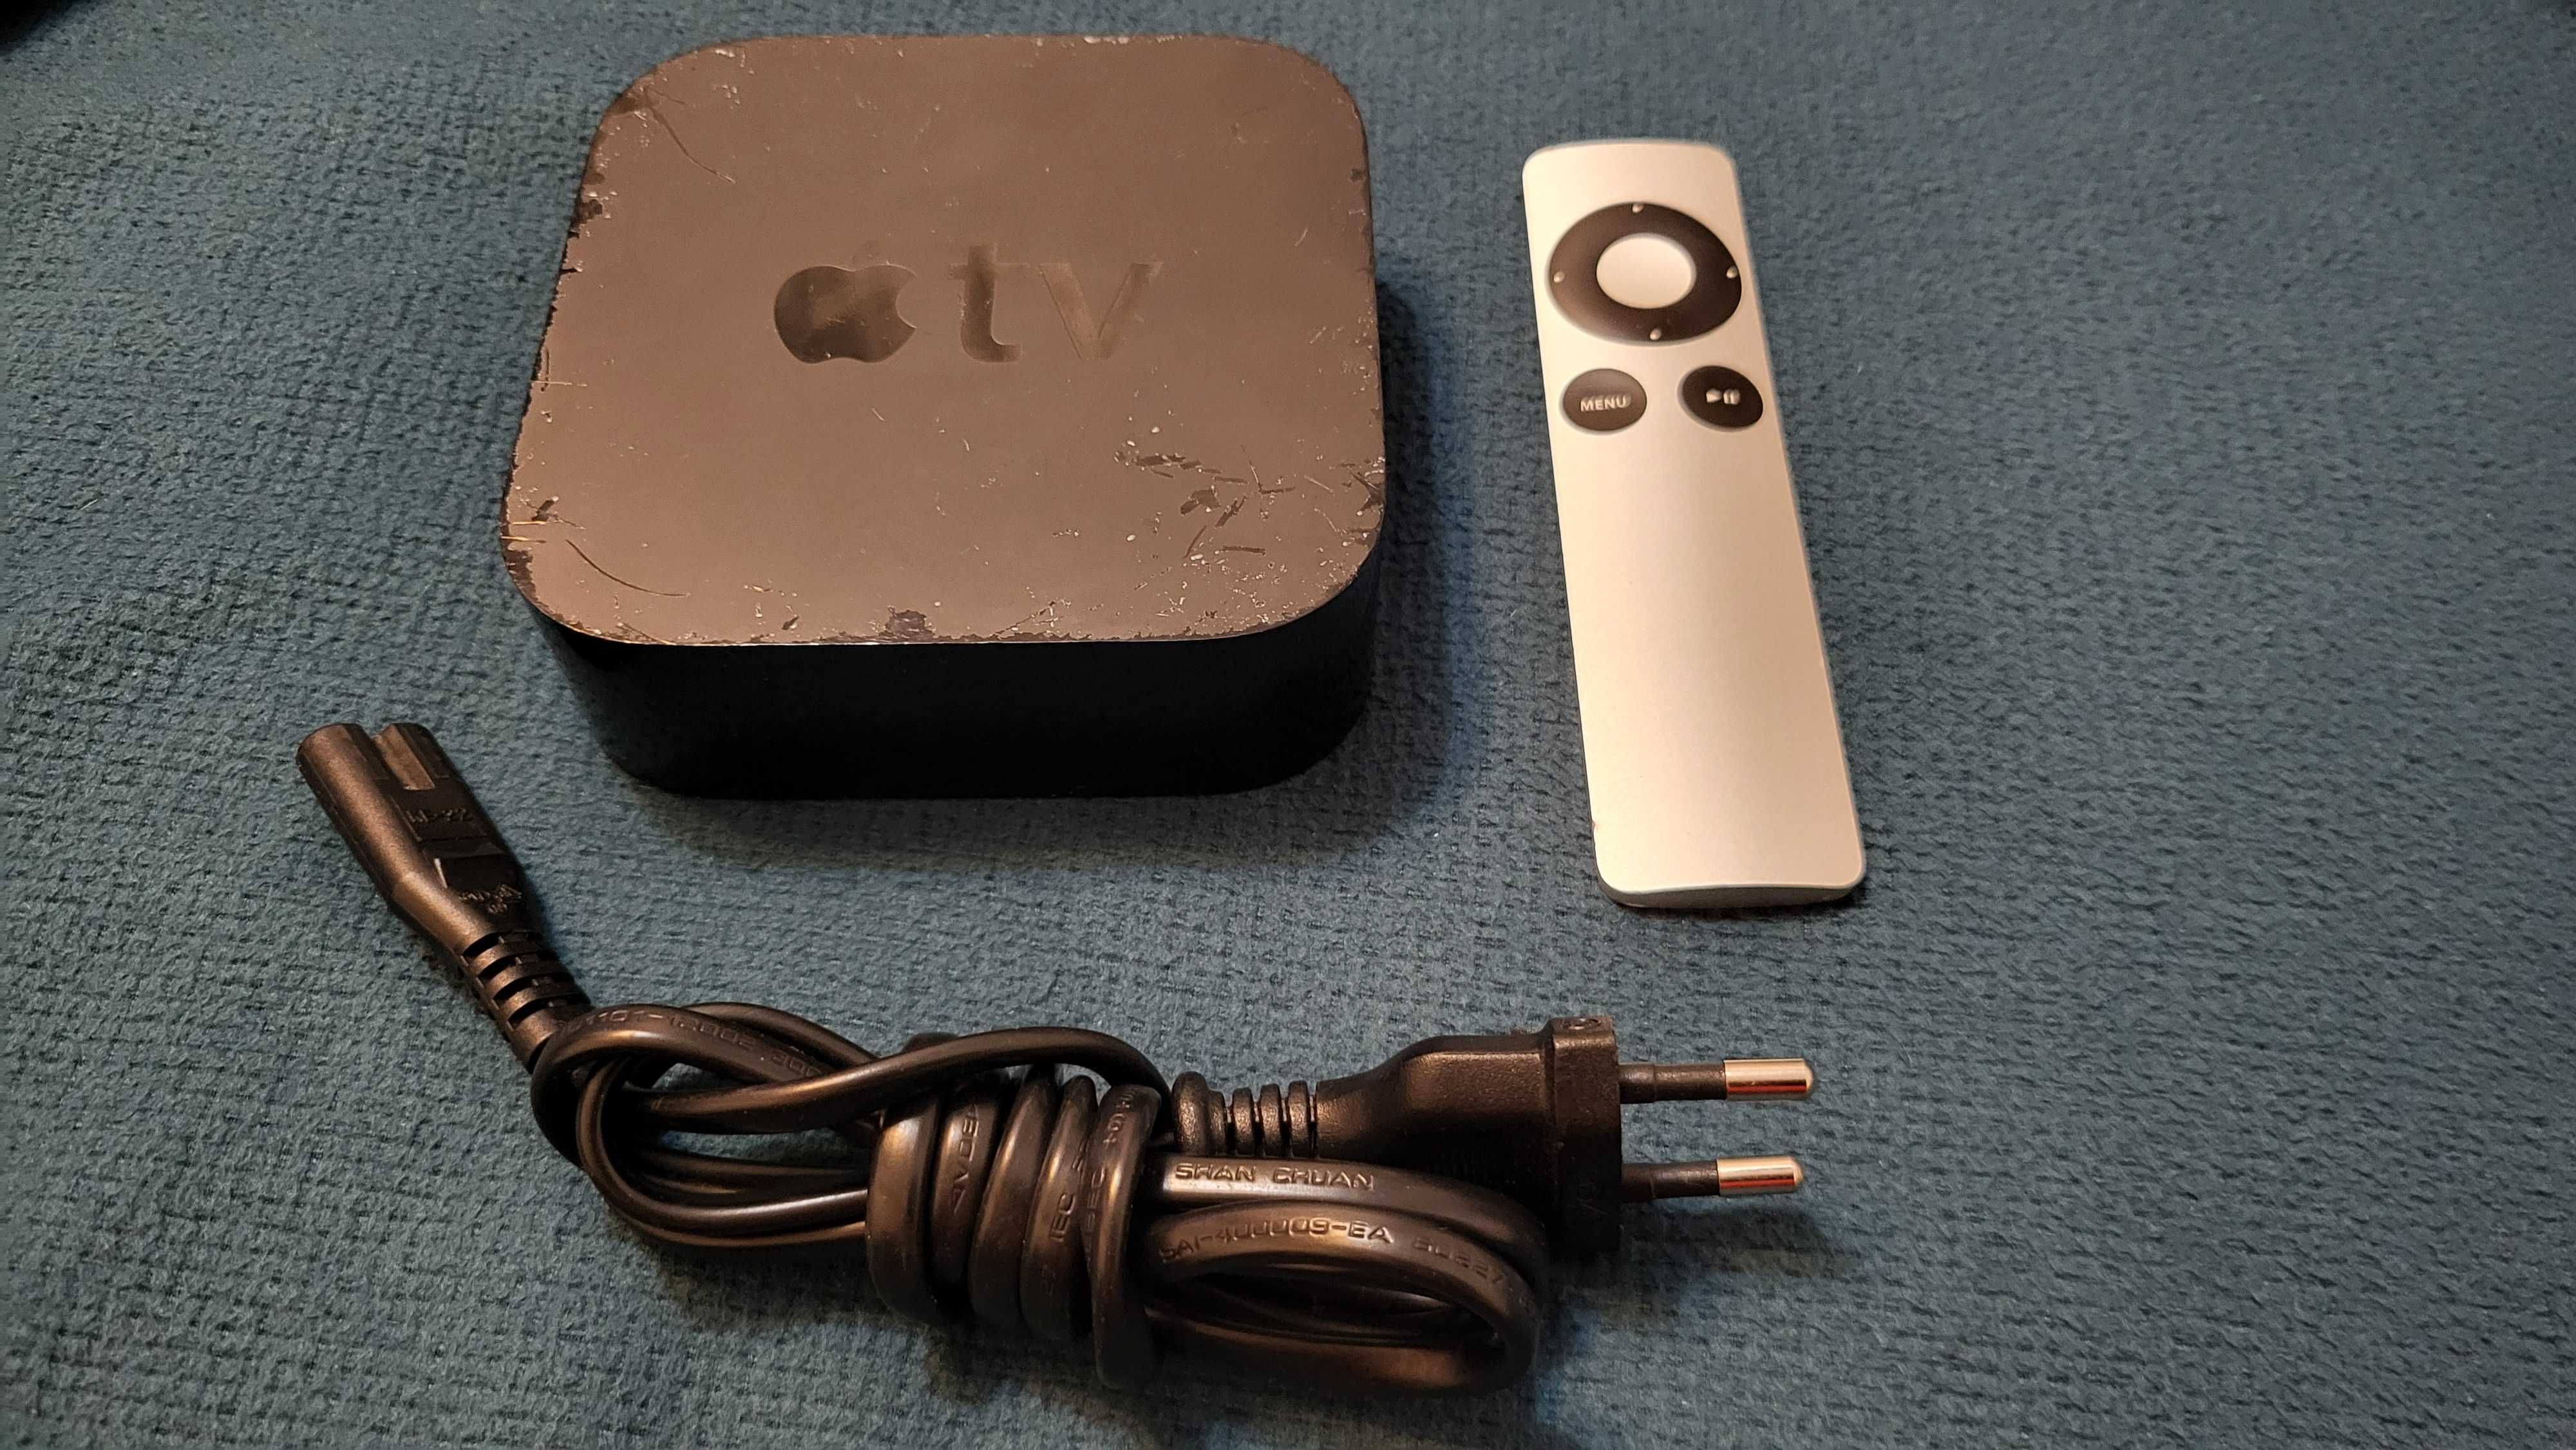 Apple TV Media-player  A1625, 4th gen, 32GB fuctional